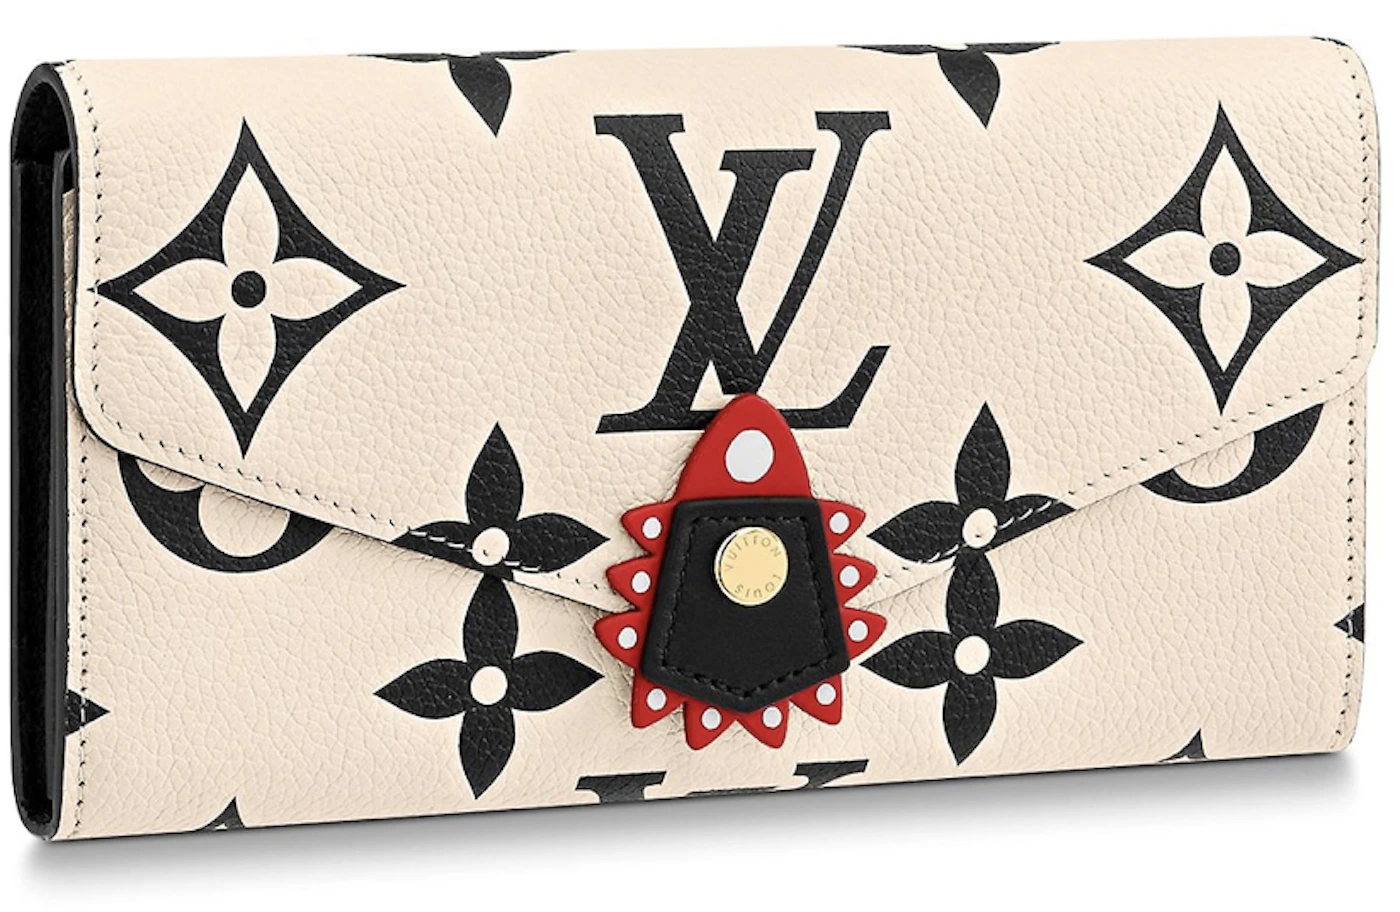 Scrapbooking Faeries: Louis Vuitton paper handbag,12x12 paper and